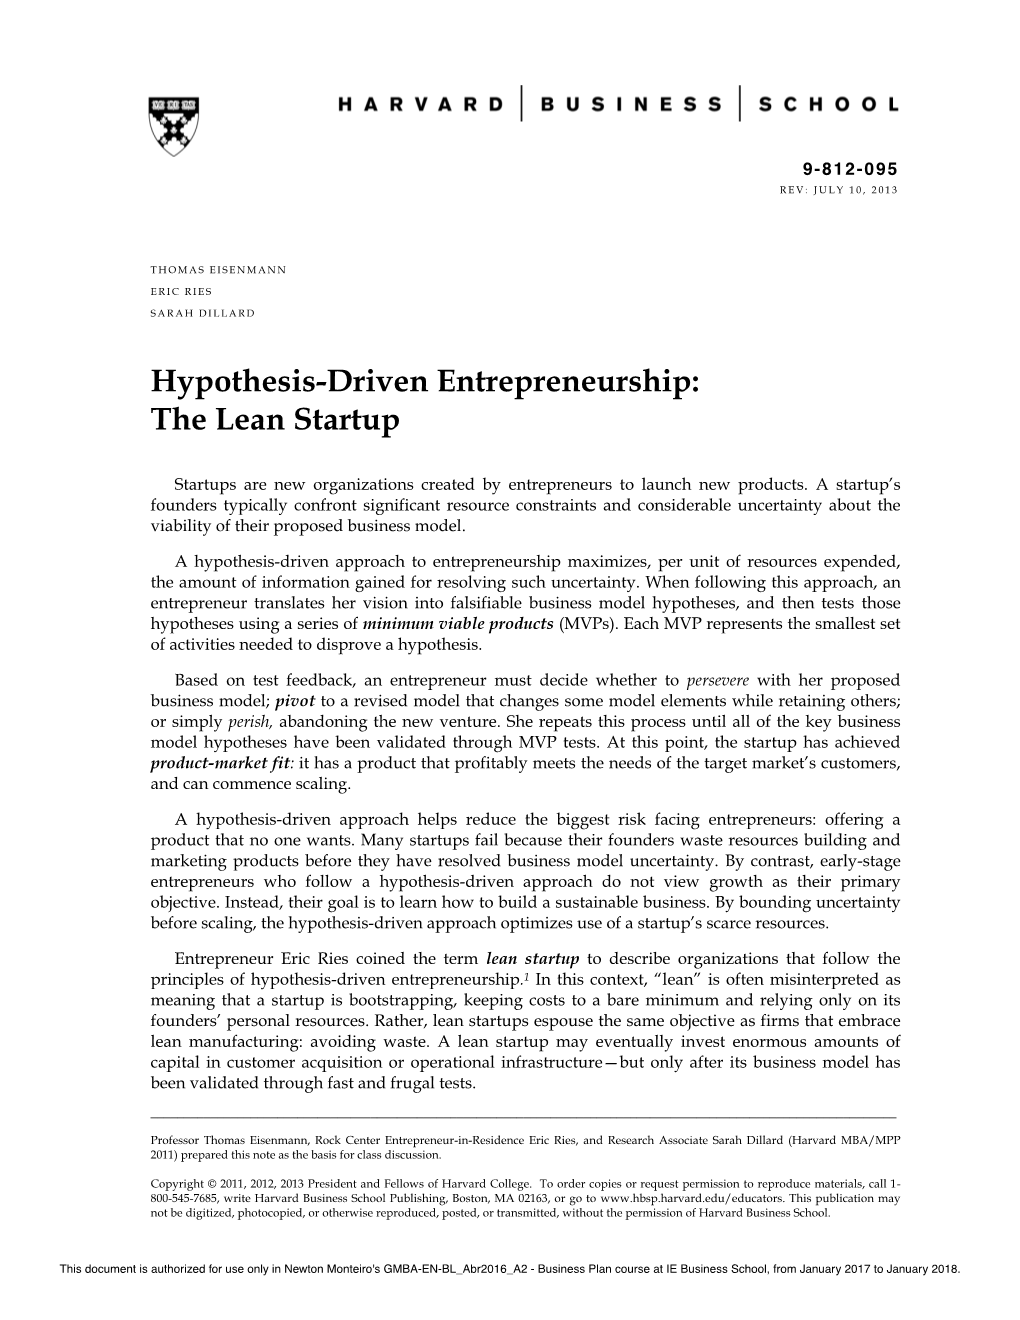 Hypothesis-Driven Entrepreneurship: the Lean Startup